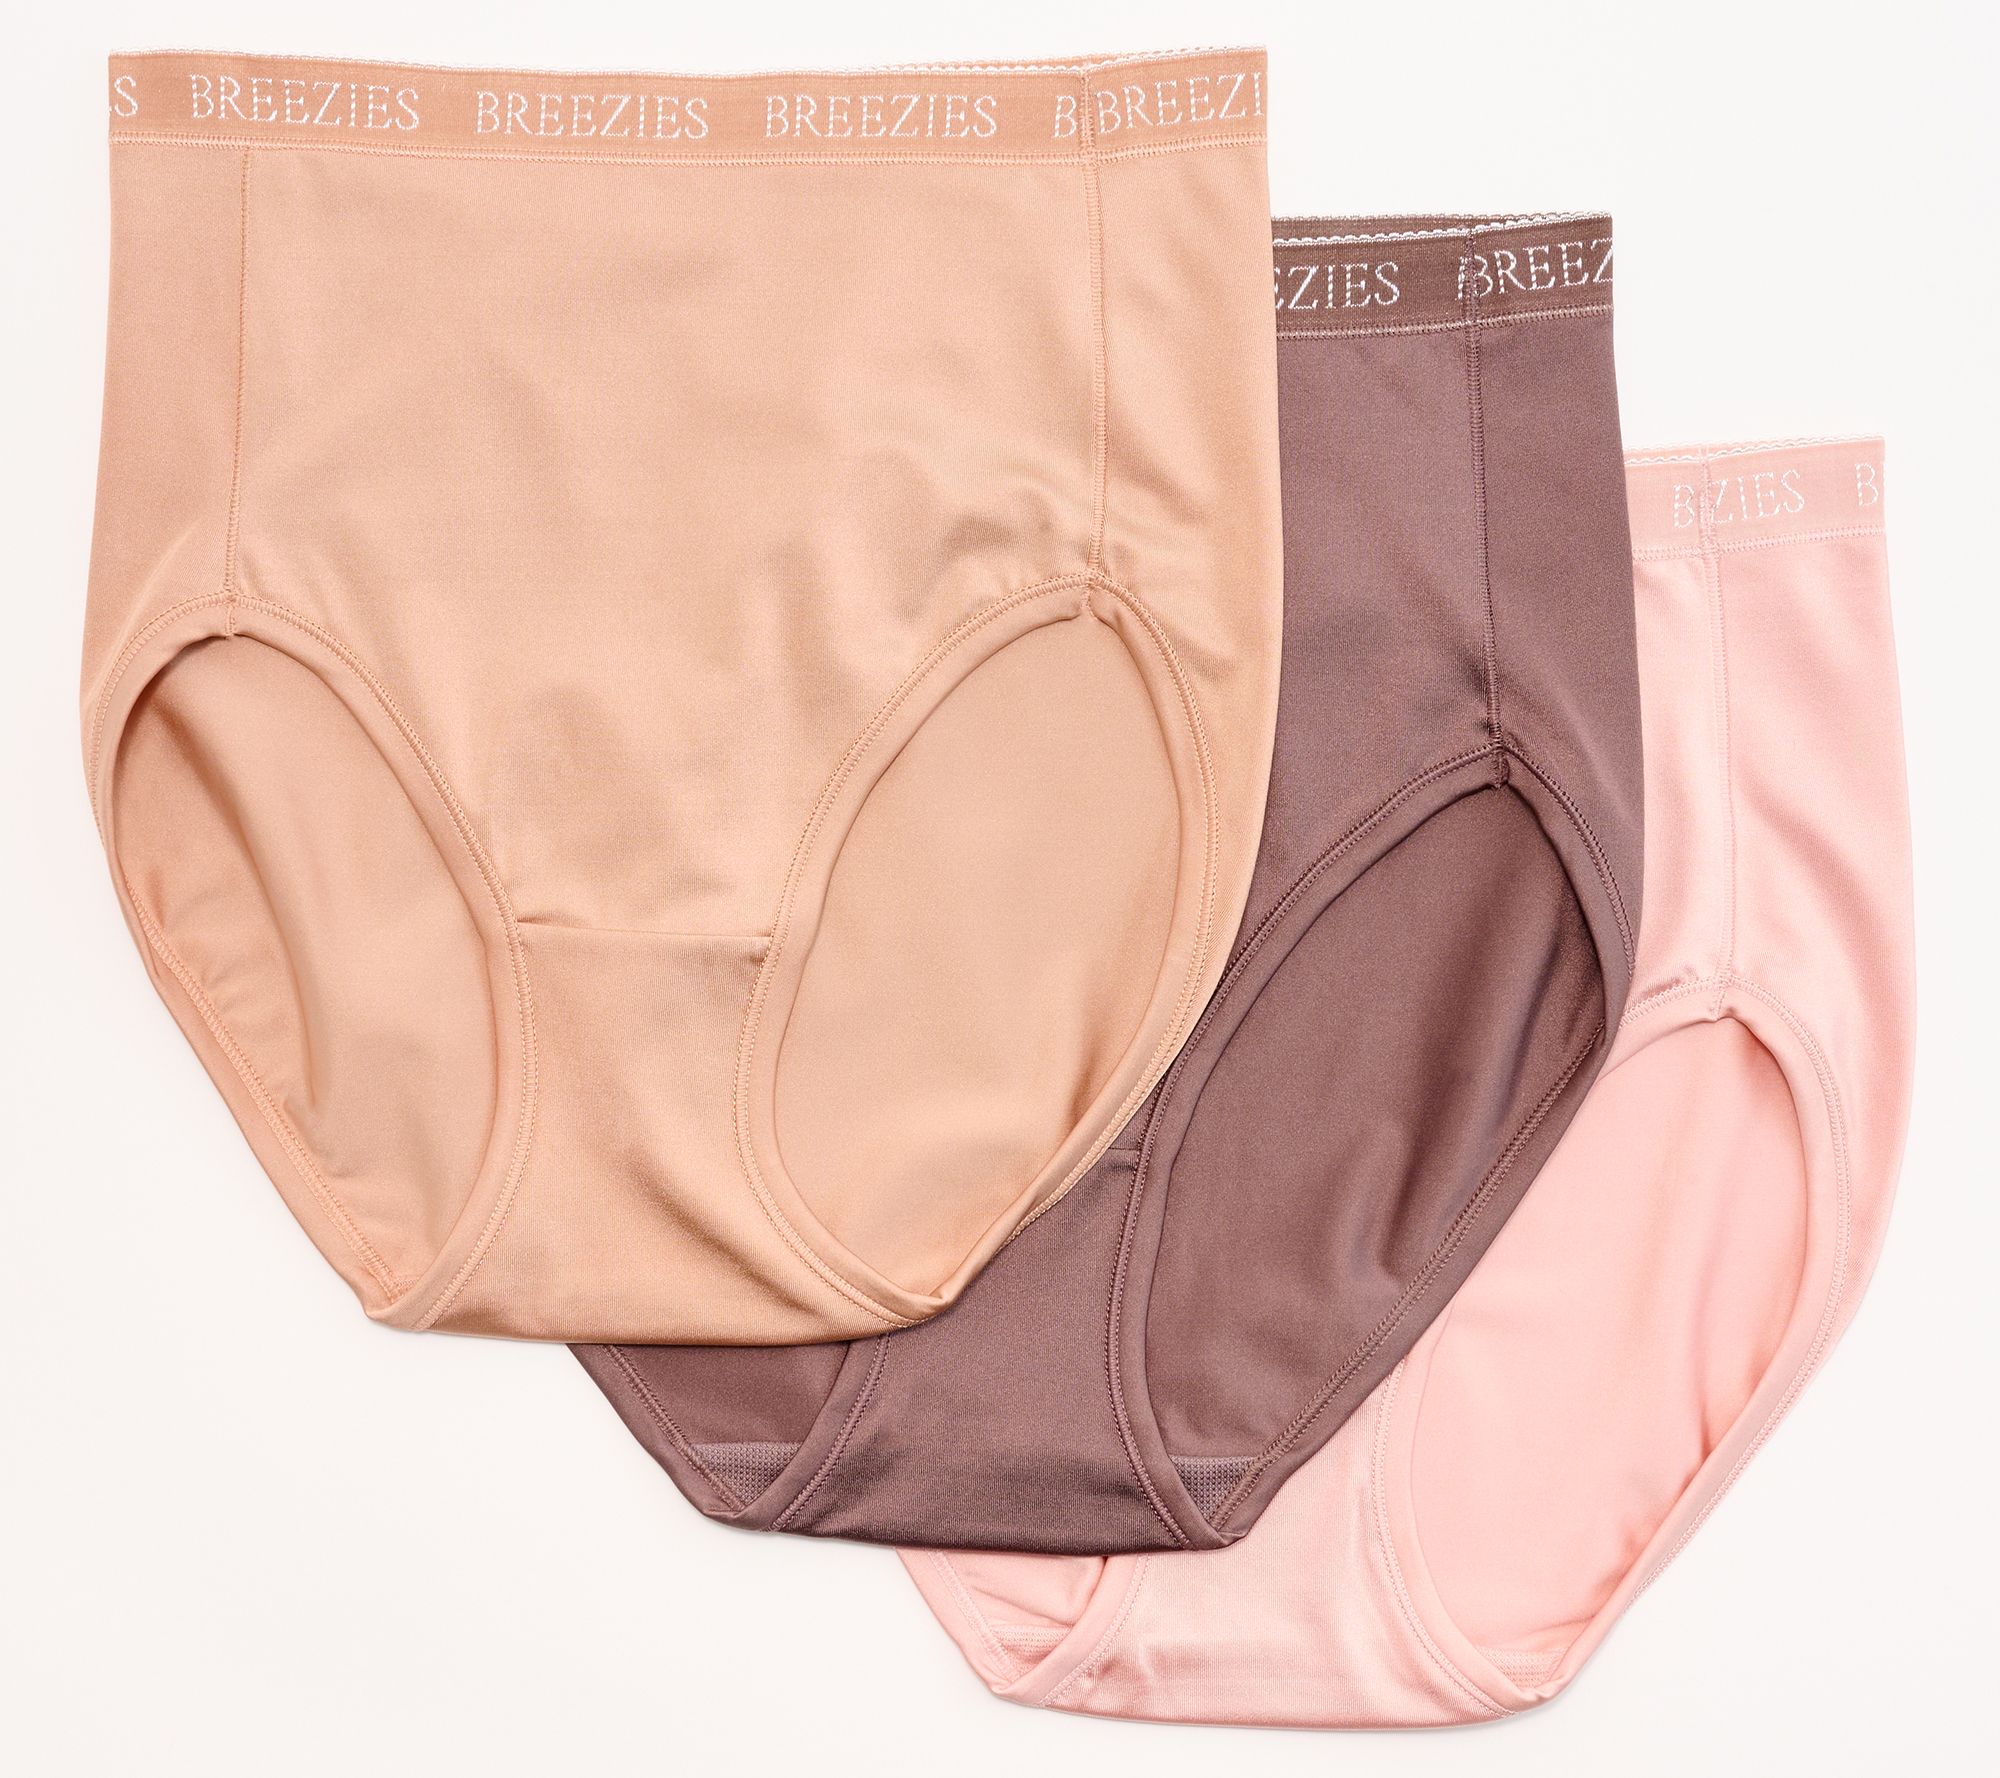 Breezies Women’s Set of 3 Bonded Seamless High-Cut Panties 